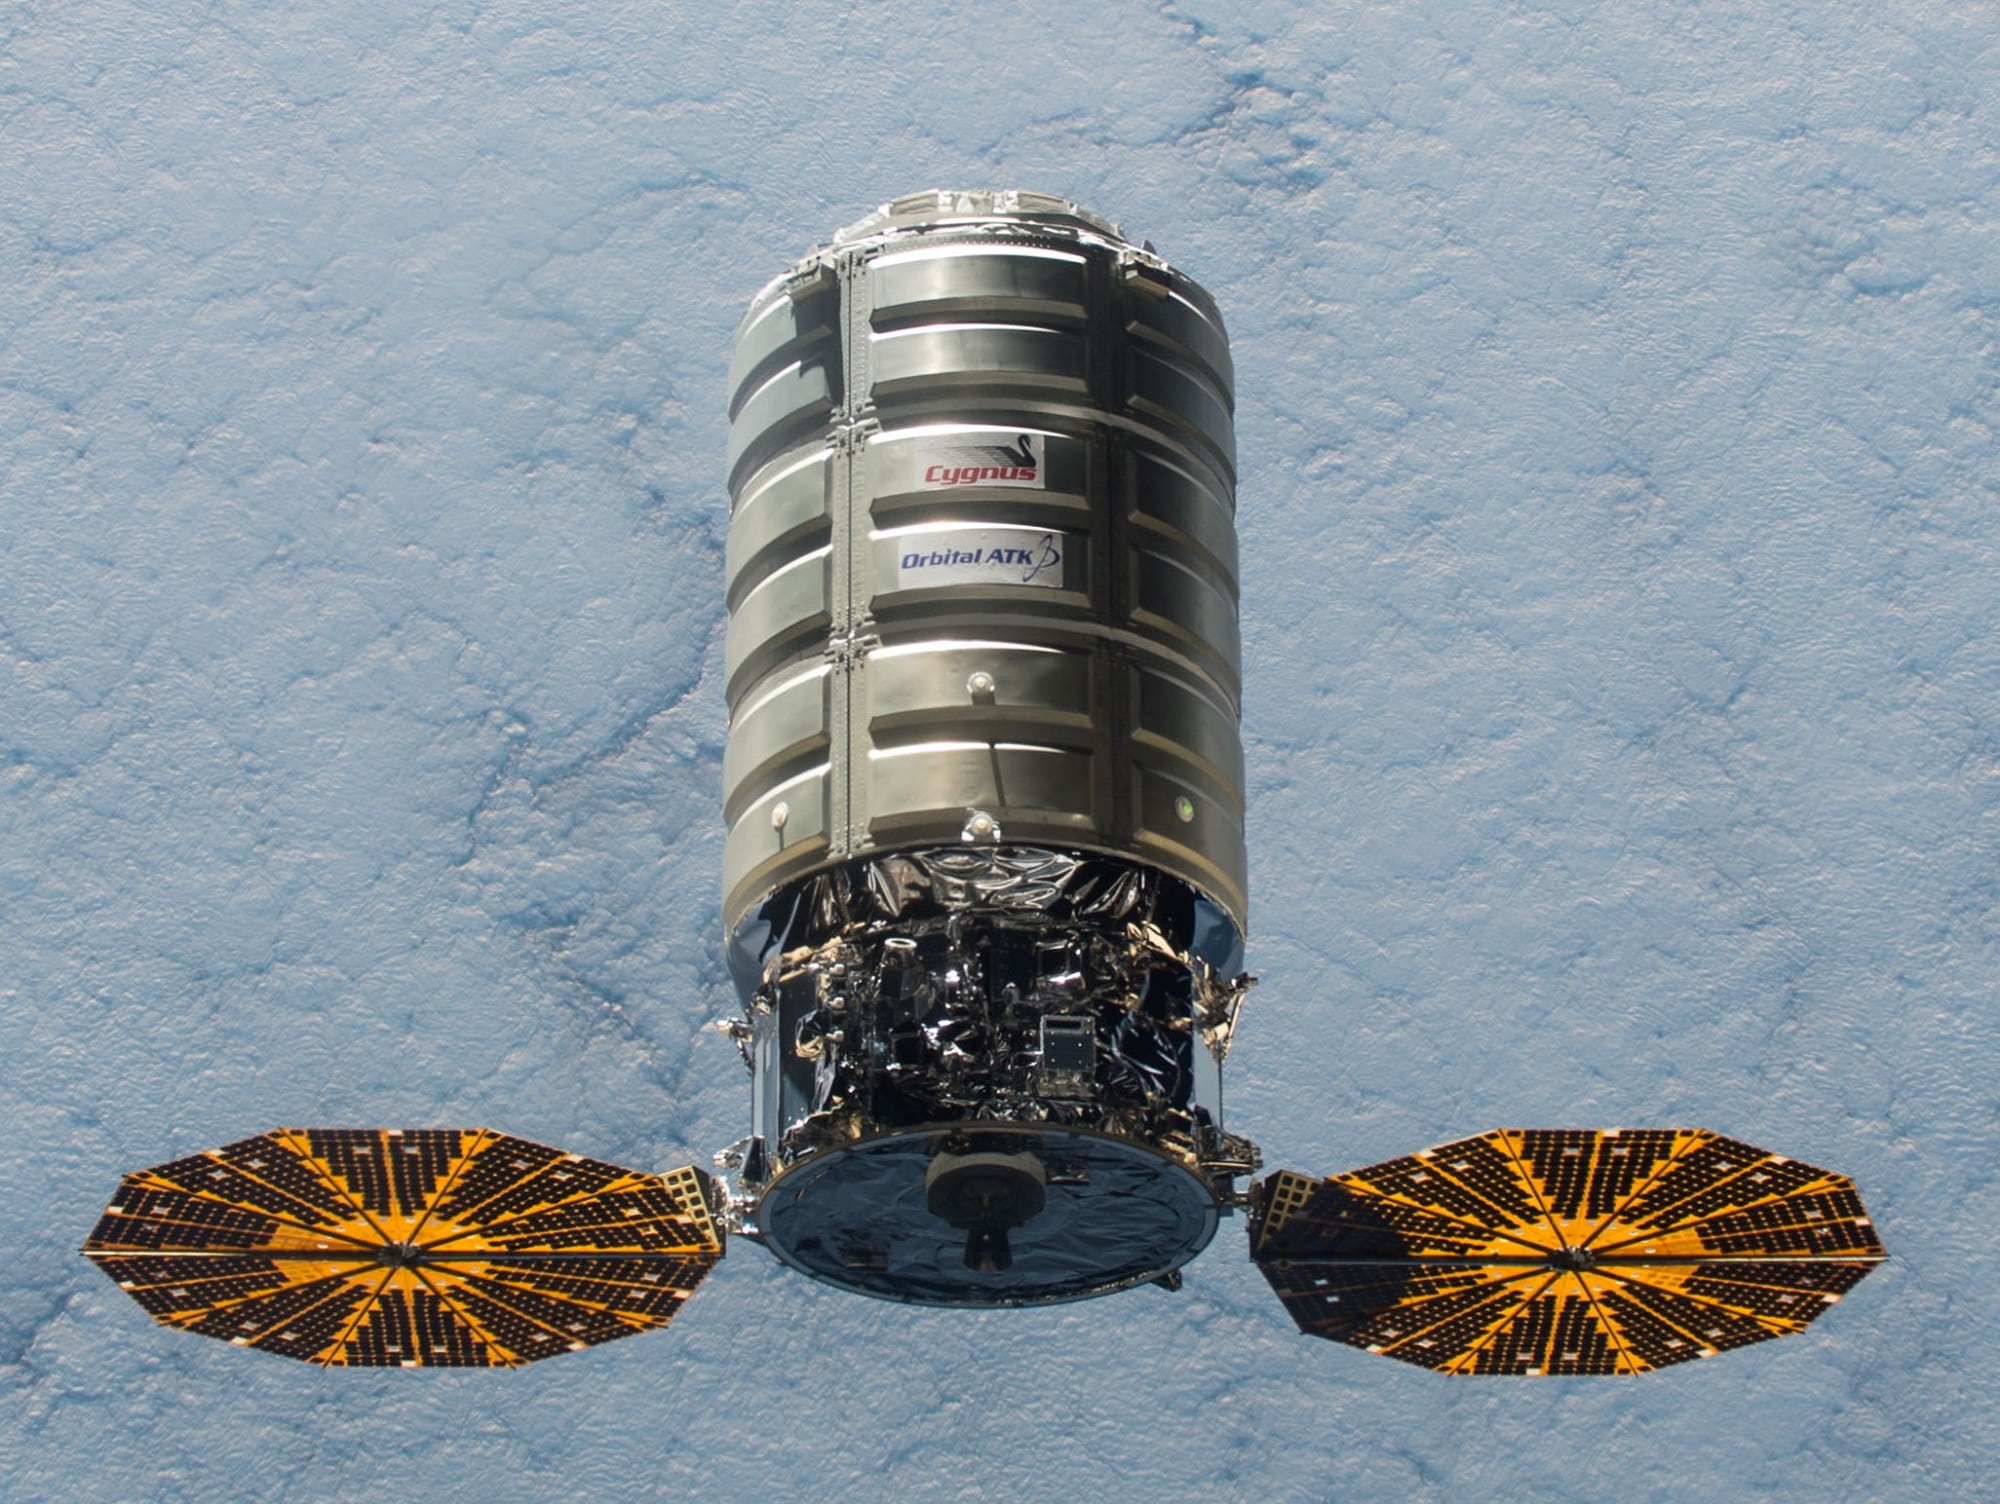 grayand brown satellite on space, spacecraft, cygnus 5, international space station